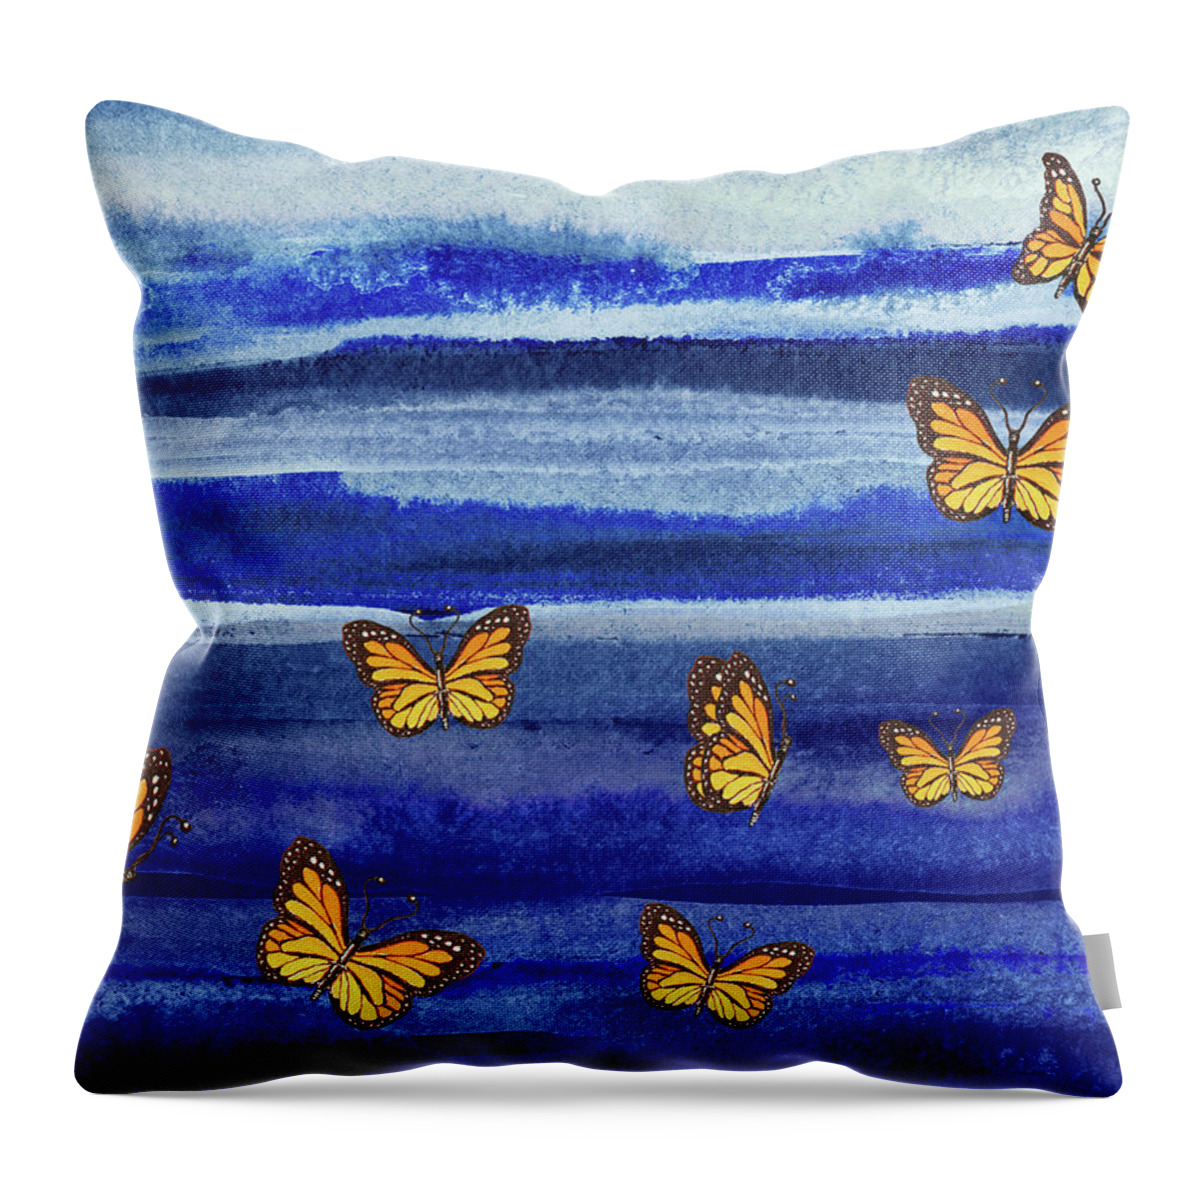 Butterflies Throw Pillow featuring the painting Butterflies Flying In The Sky Watercolor by Irina Sztukowski